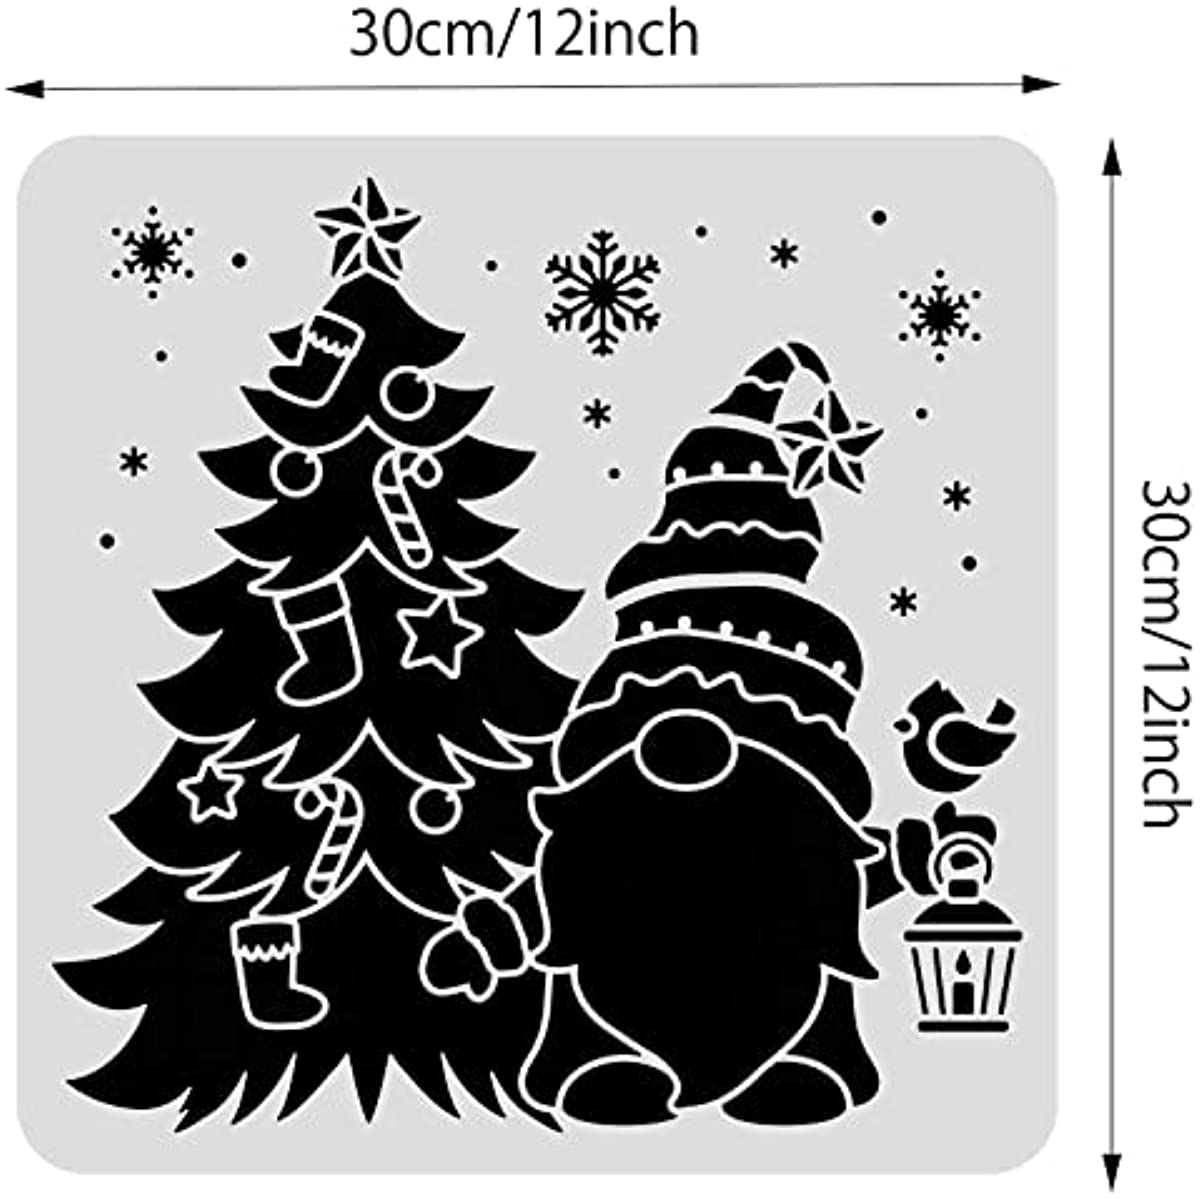 Christmas Gnome Drawing Painting Stencils Christmas Tree